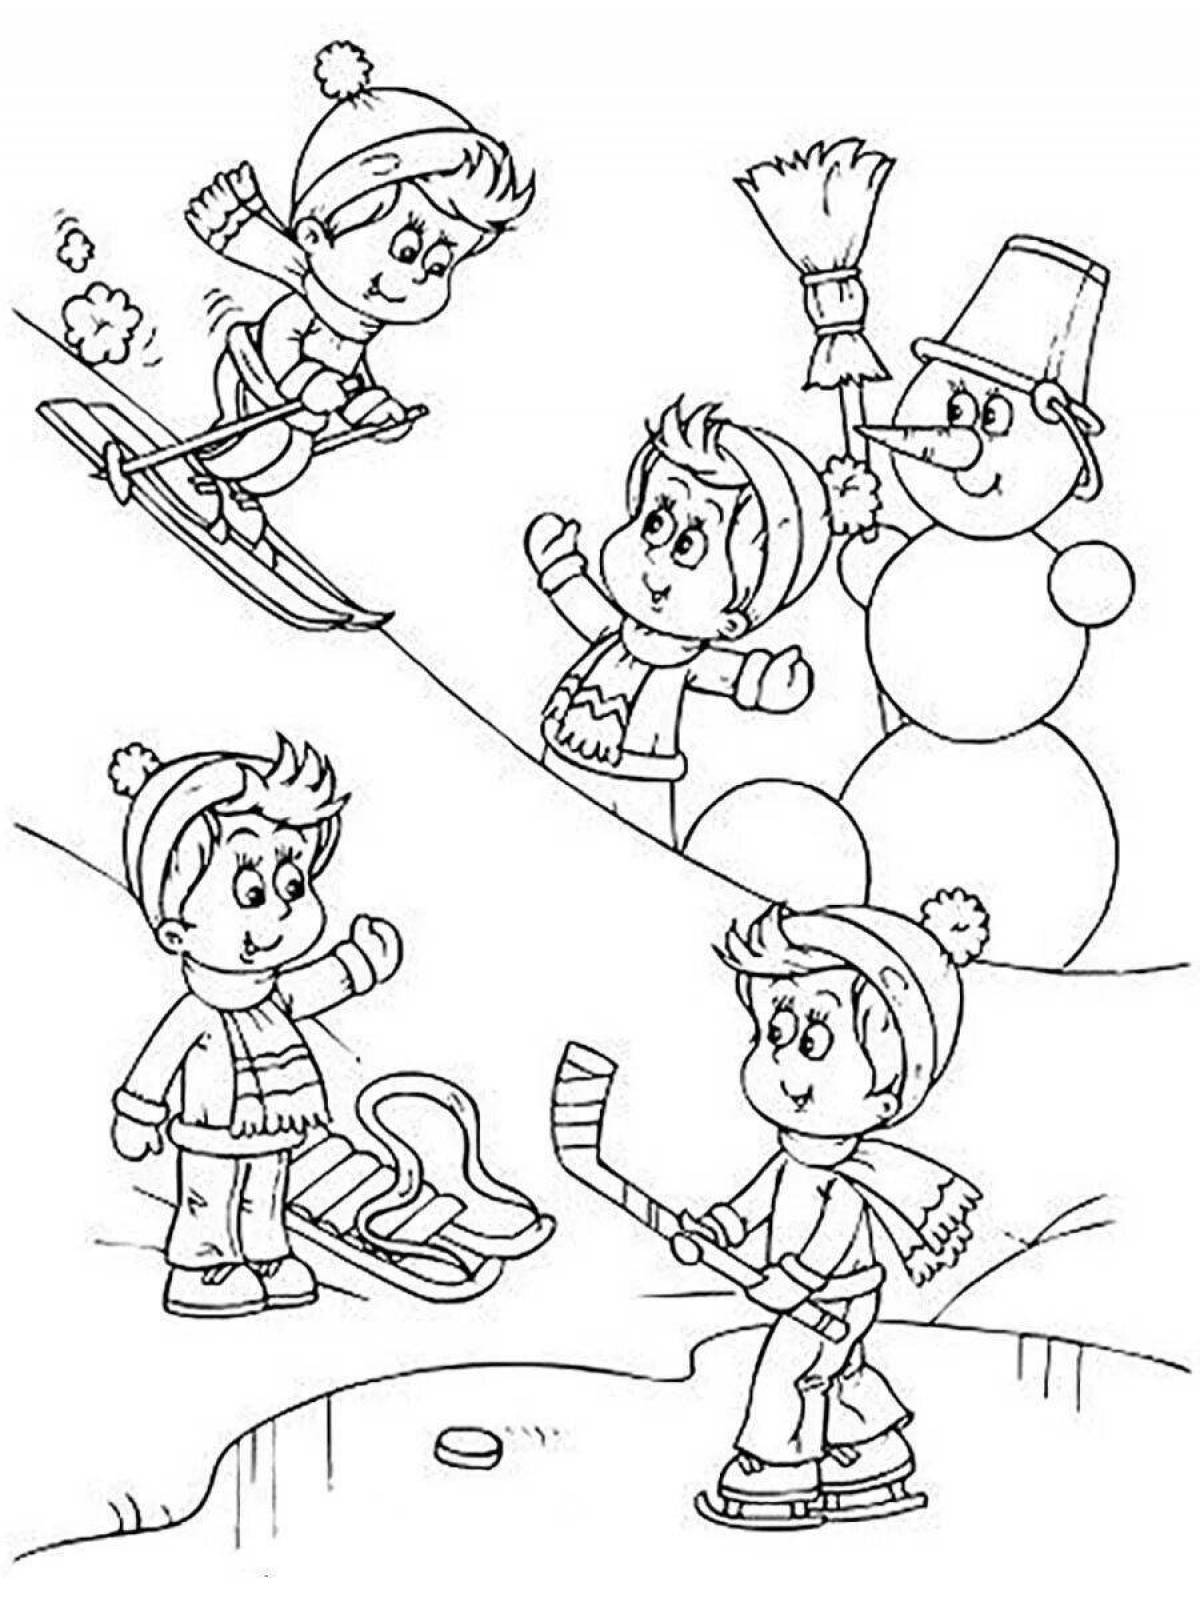 Inspirational coloring drawing drawing of winter fun